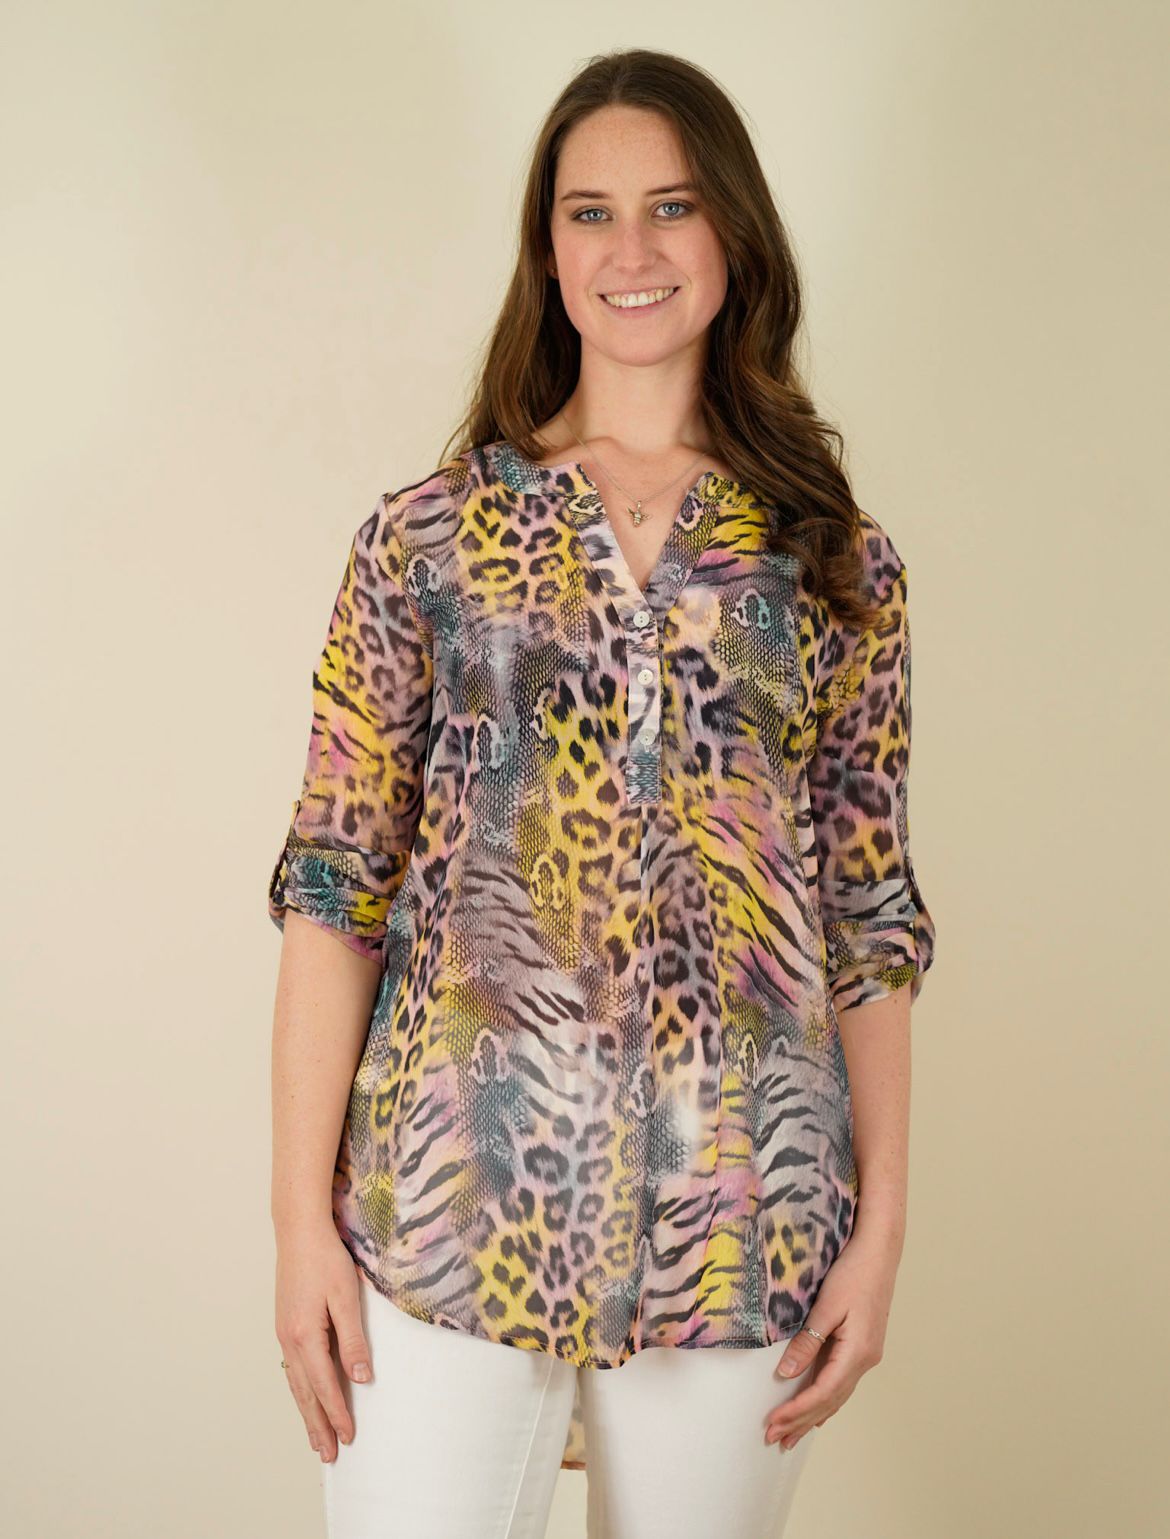 Multicoloured animal print blouse size M